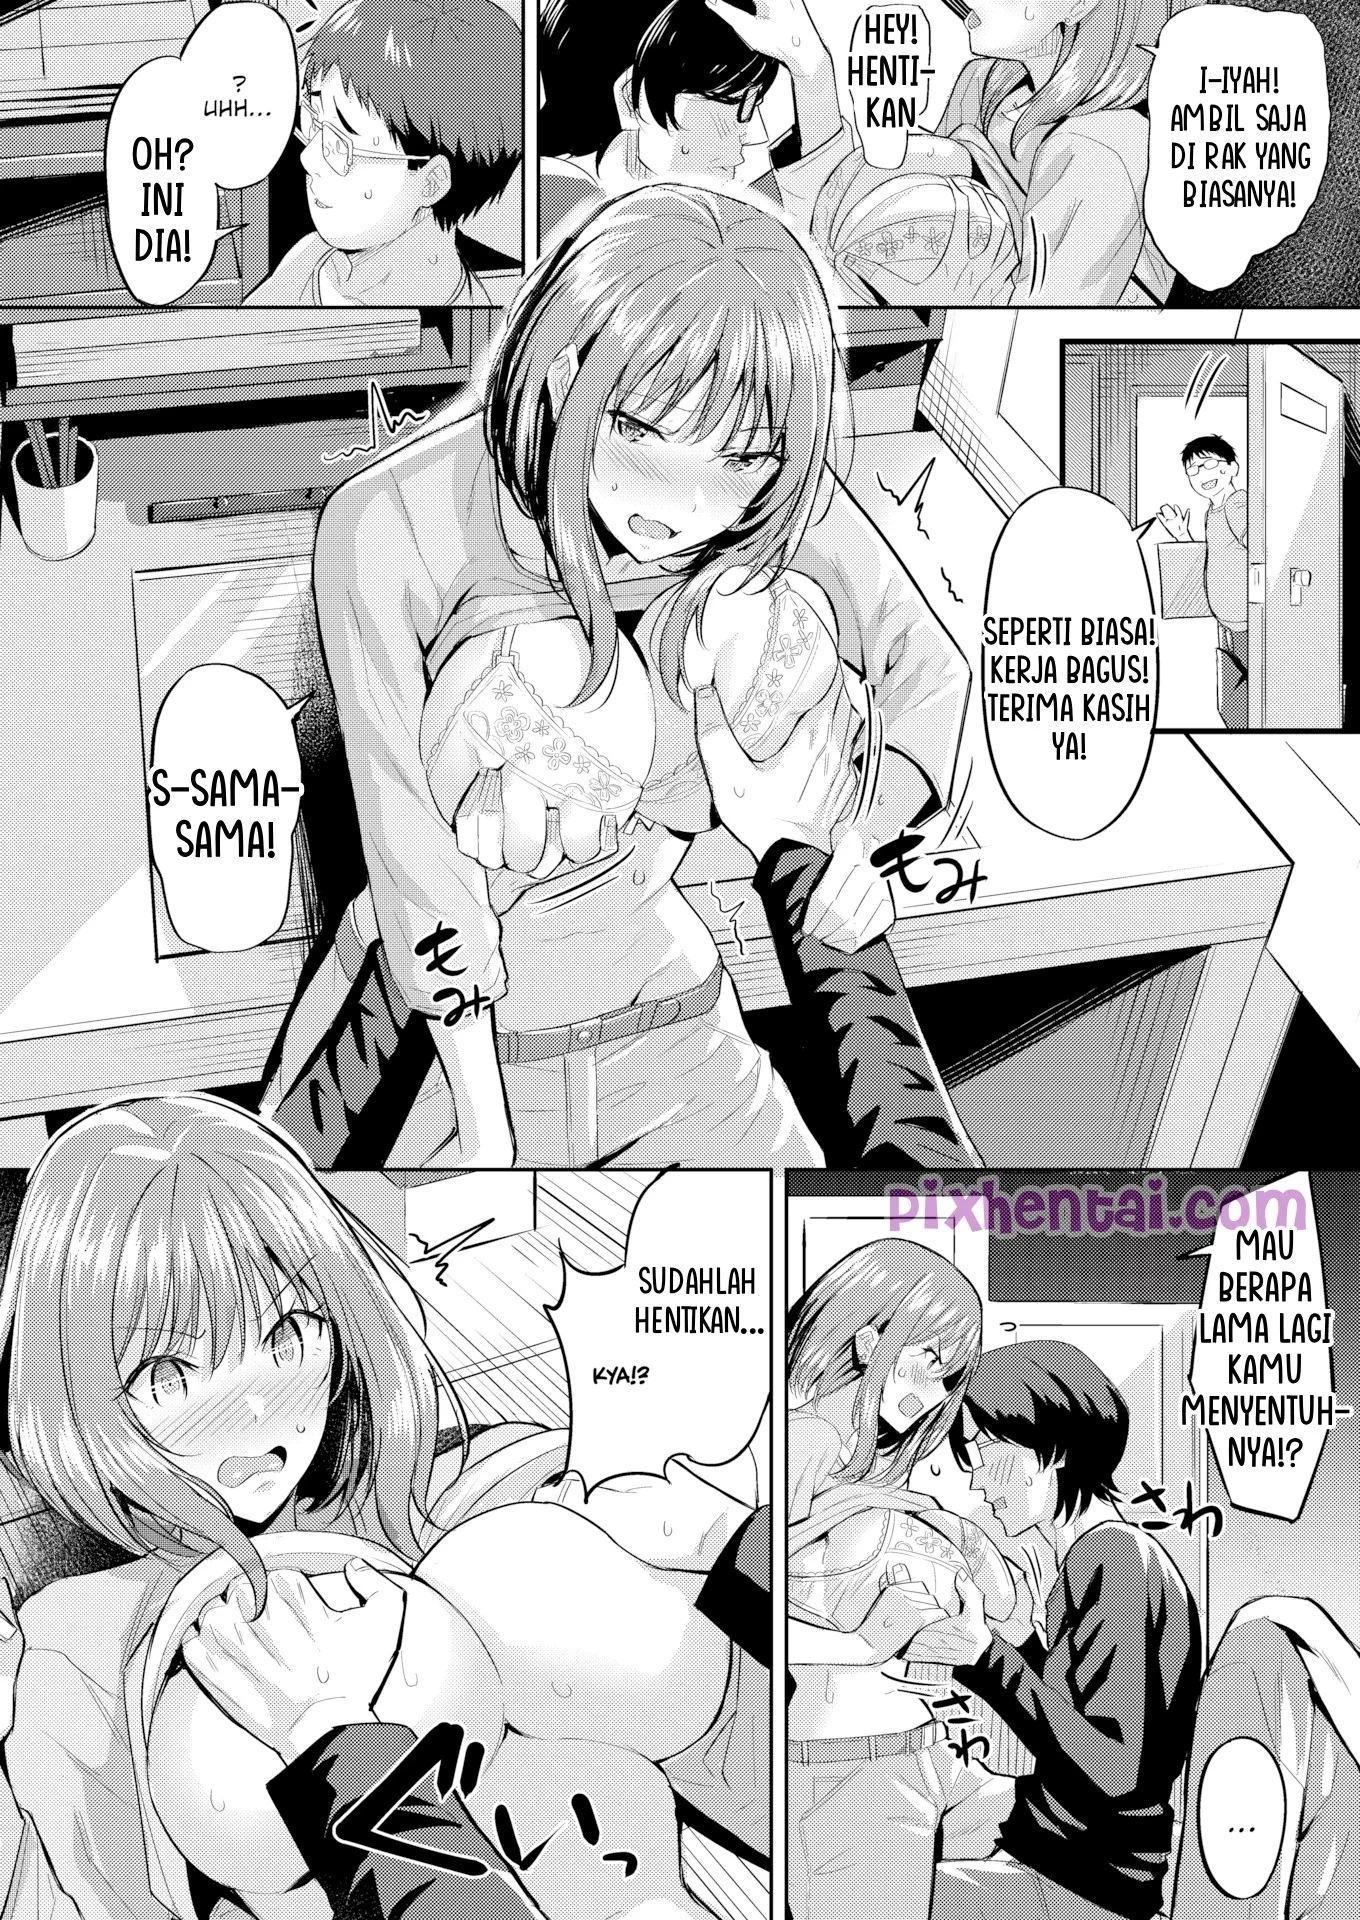 Komik hentai xxx manga sex bokep Susuku Jadi Bahan Referensi Animator 8